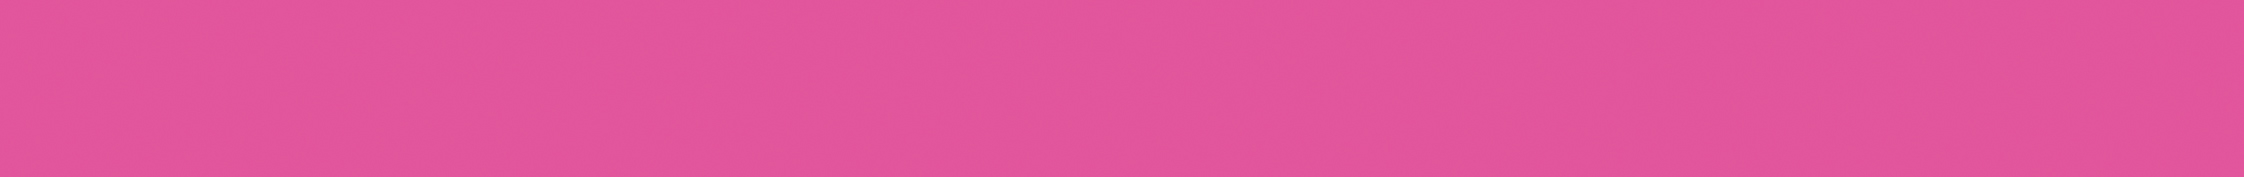 URSUS Masking Tape 15mmx10m 59050005 20g, 05 pink 20g, 05 pink